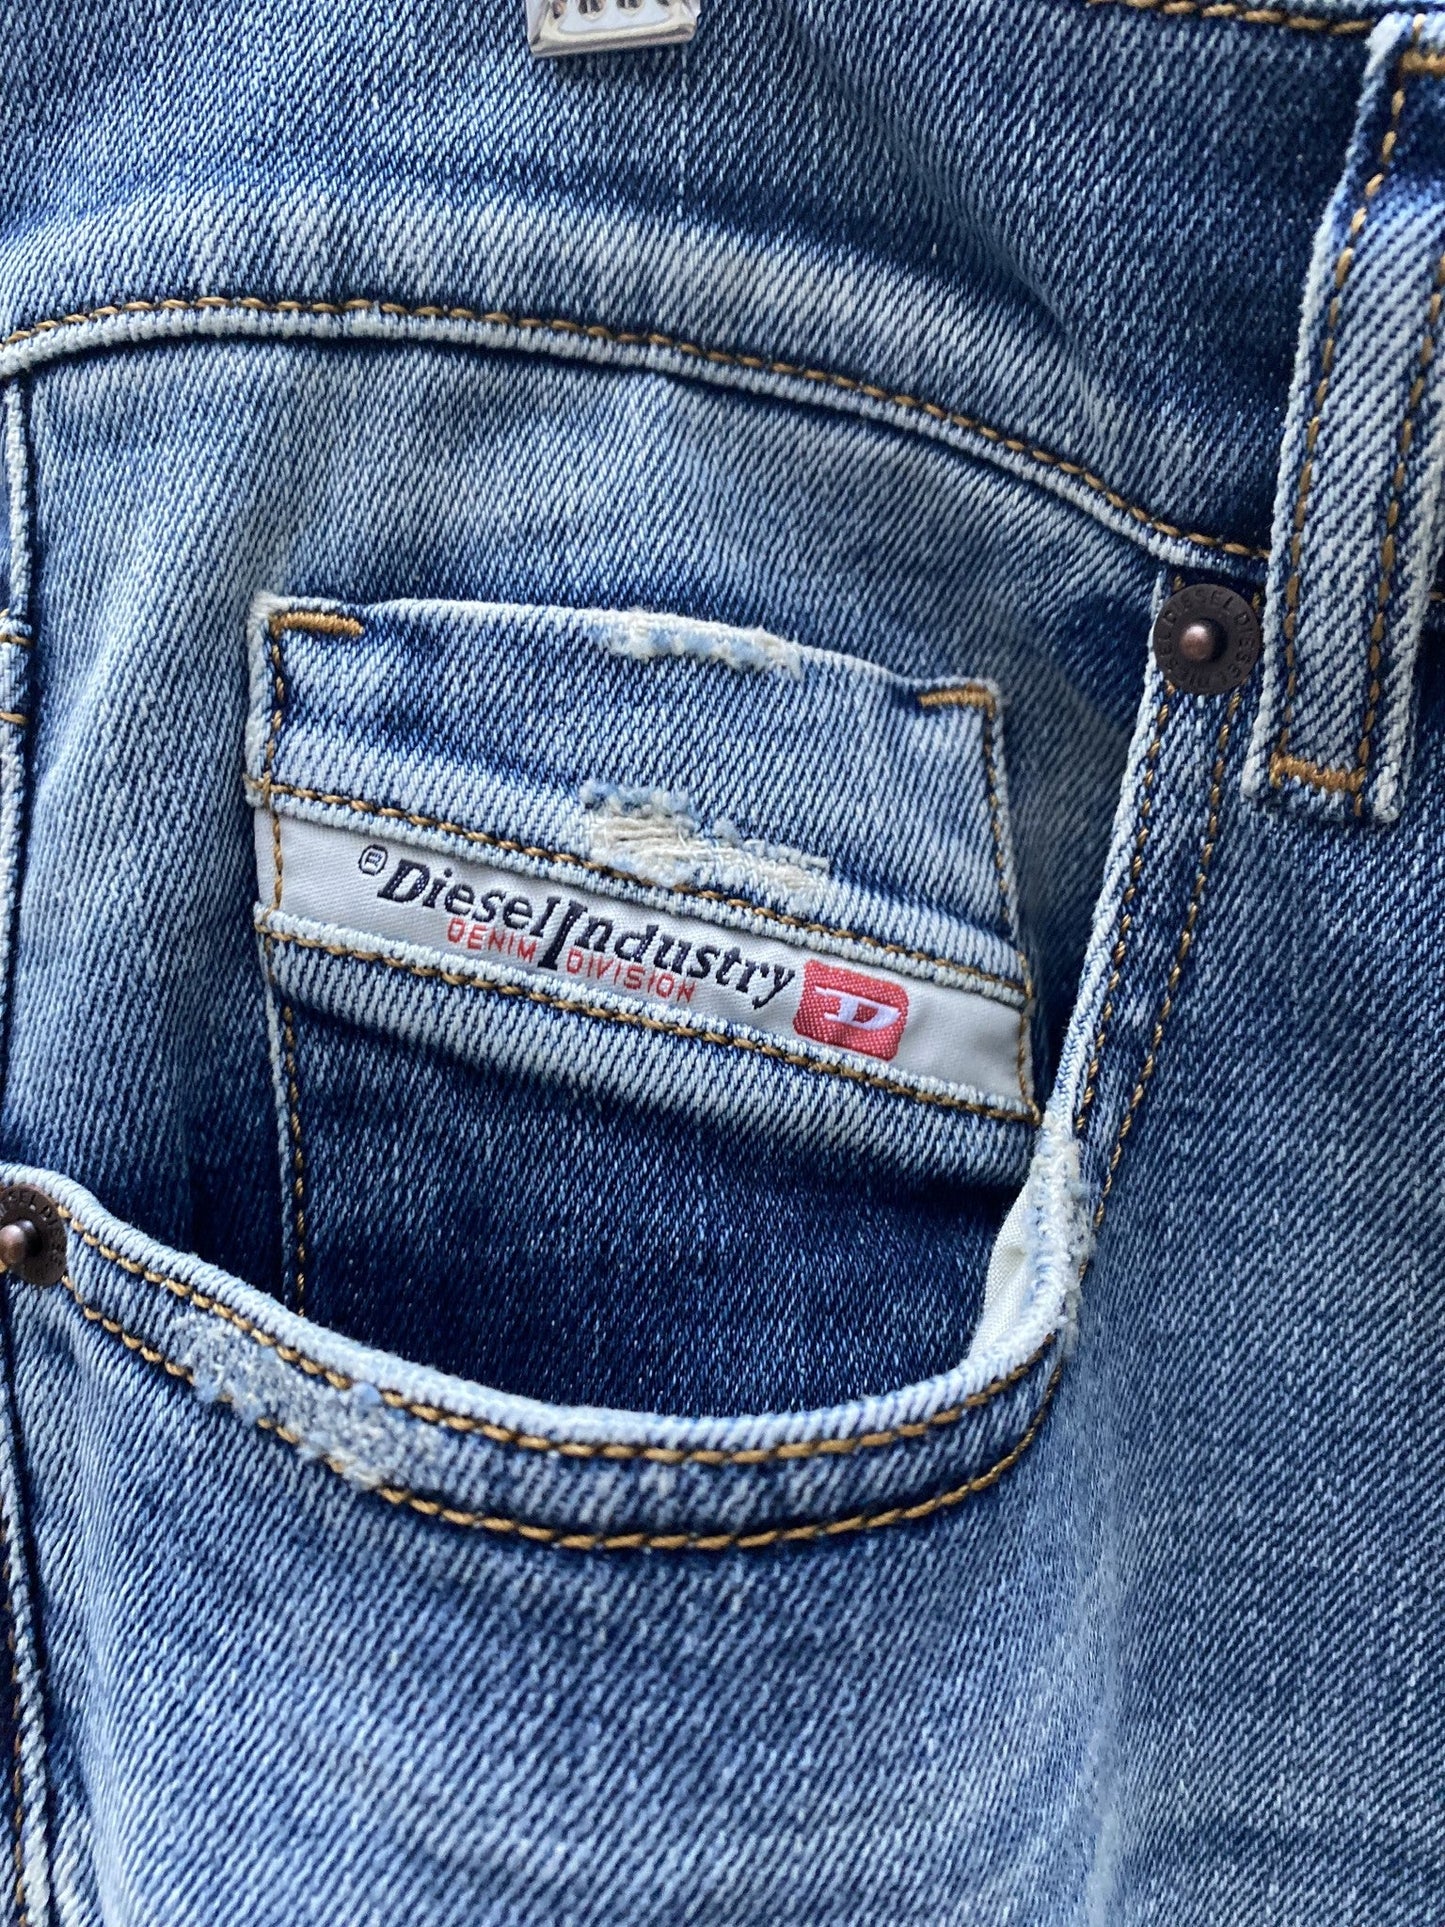 A close up of a DIESEL D-STRUKT 9C87 DENIM ripped pocket in a pair of light blue Diesel jeans.